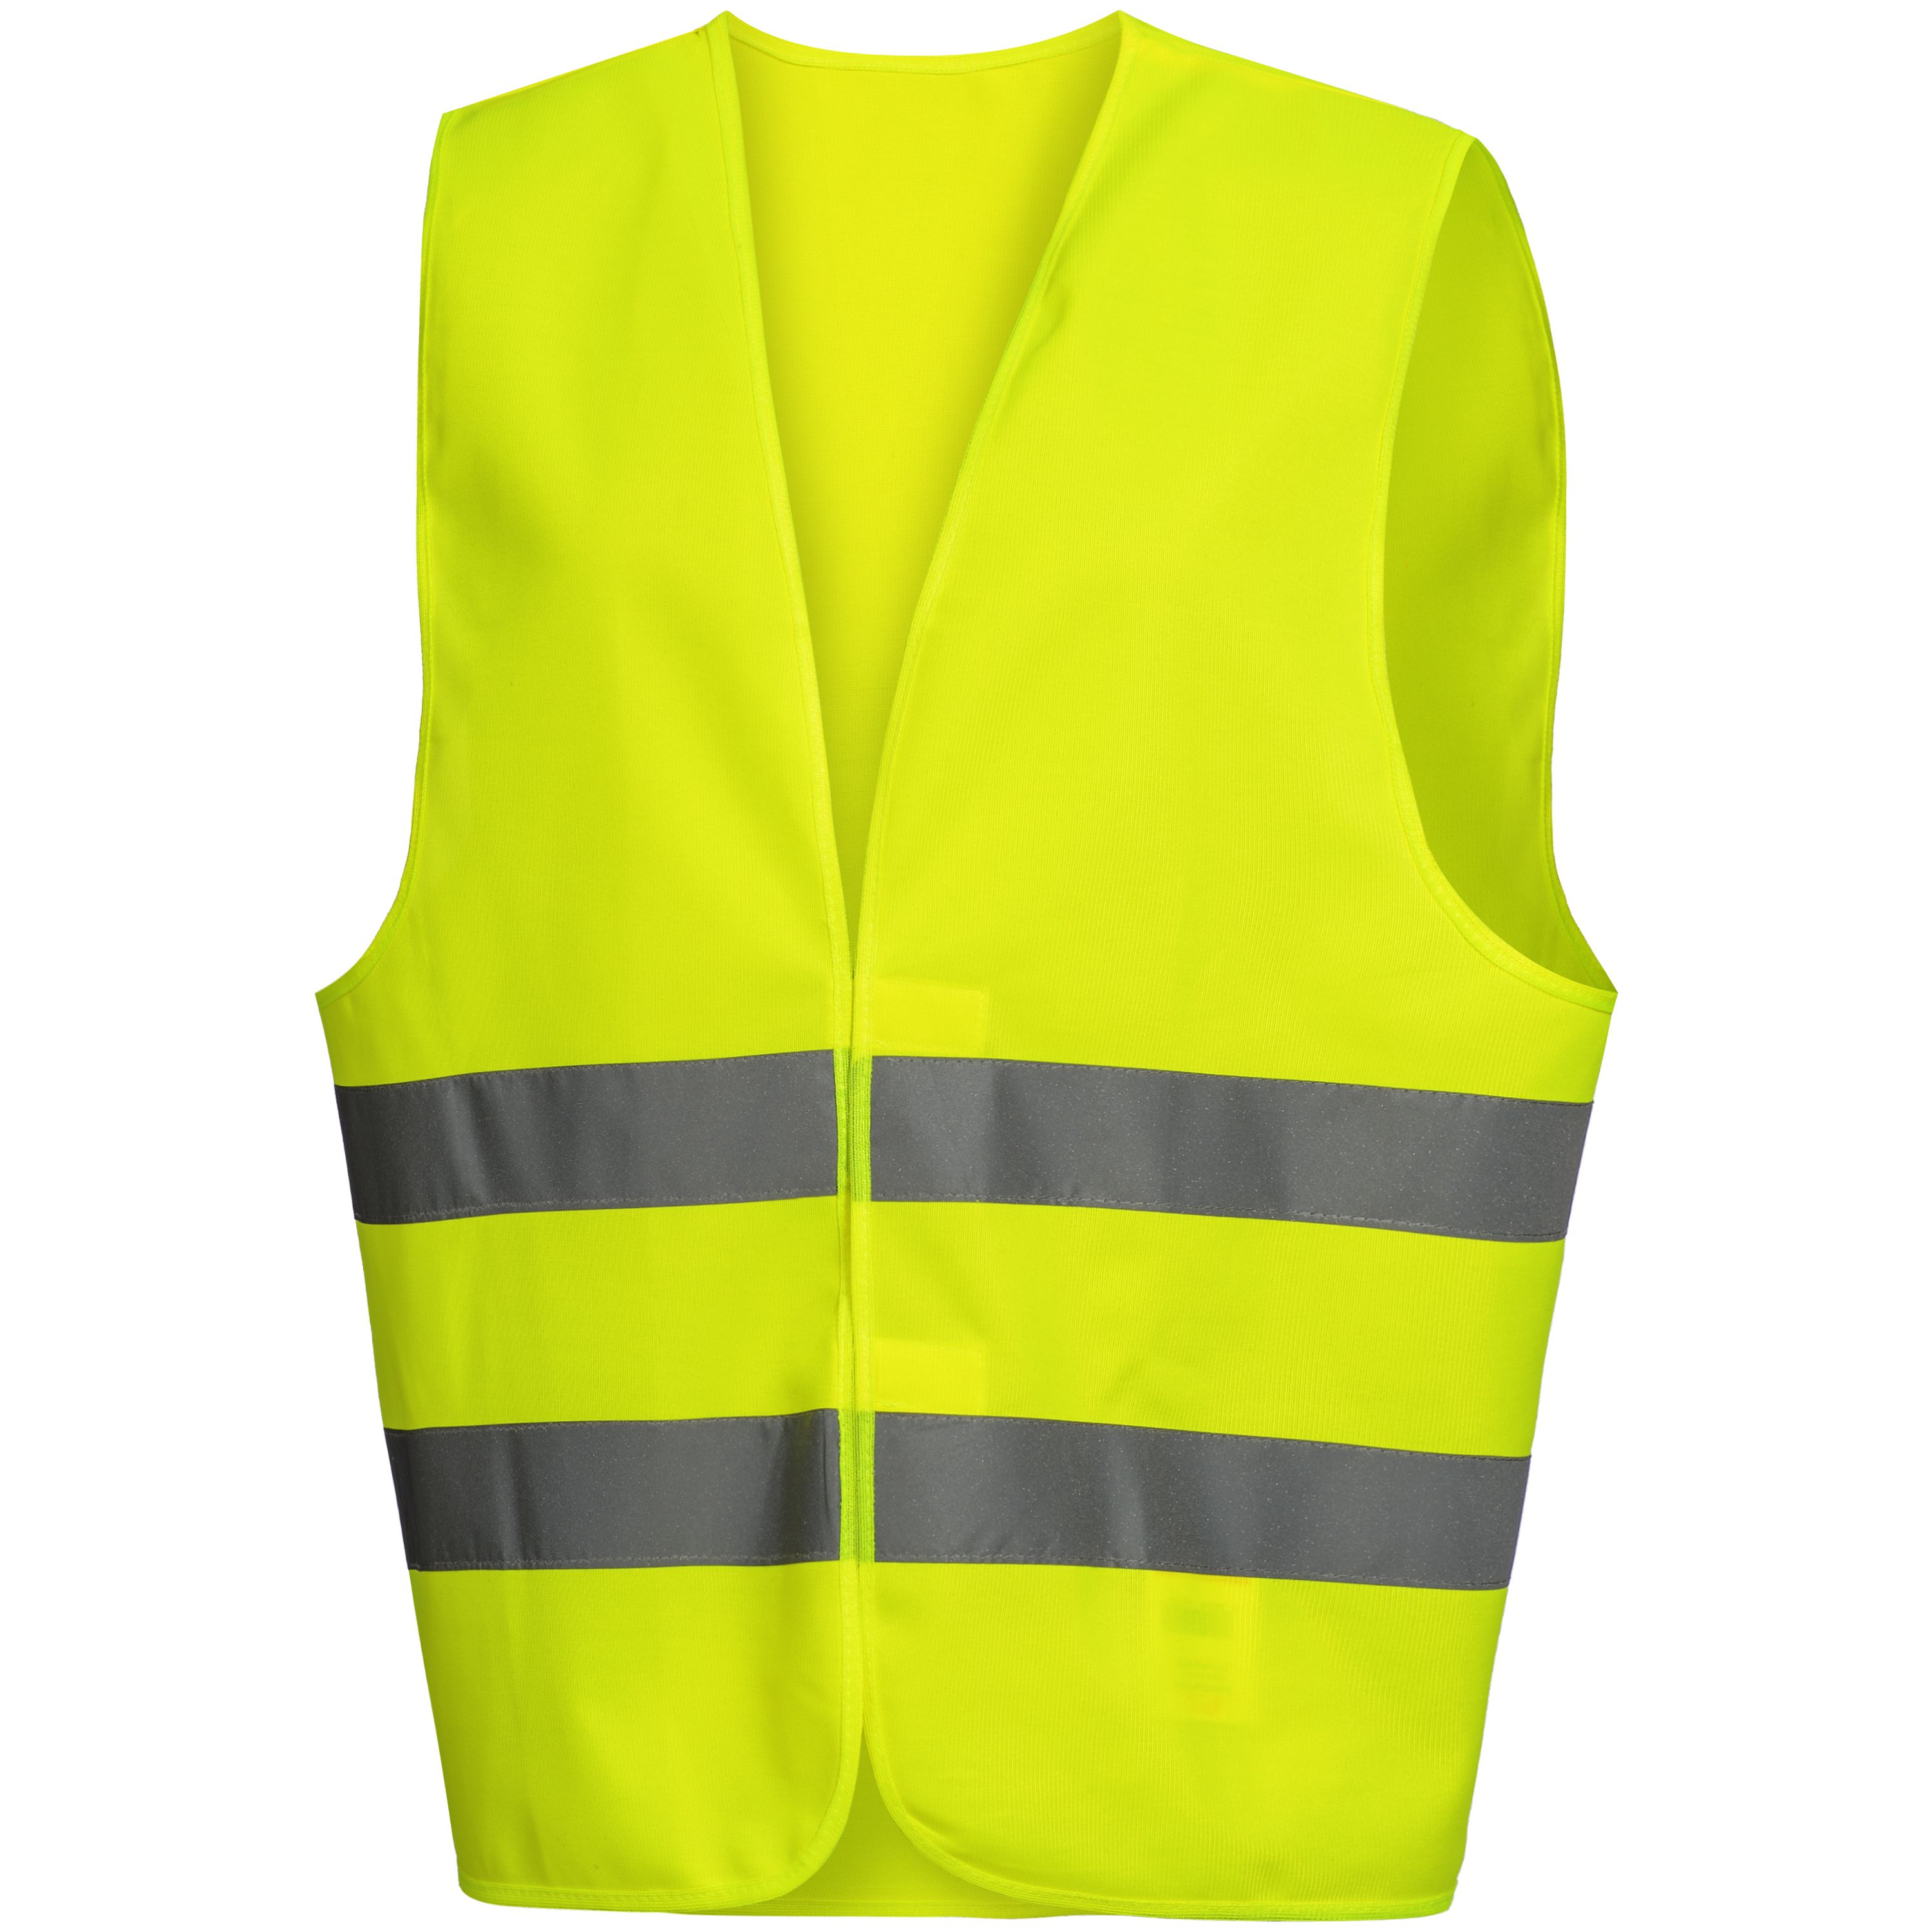 NITRAS MOTION TEX VIZ 7111 high-visibility waistcoat - lightweight waistcoat in high-visibility colour for work - neon yellow - 3XL